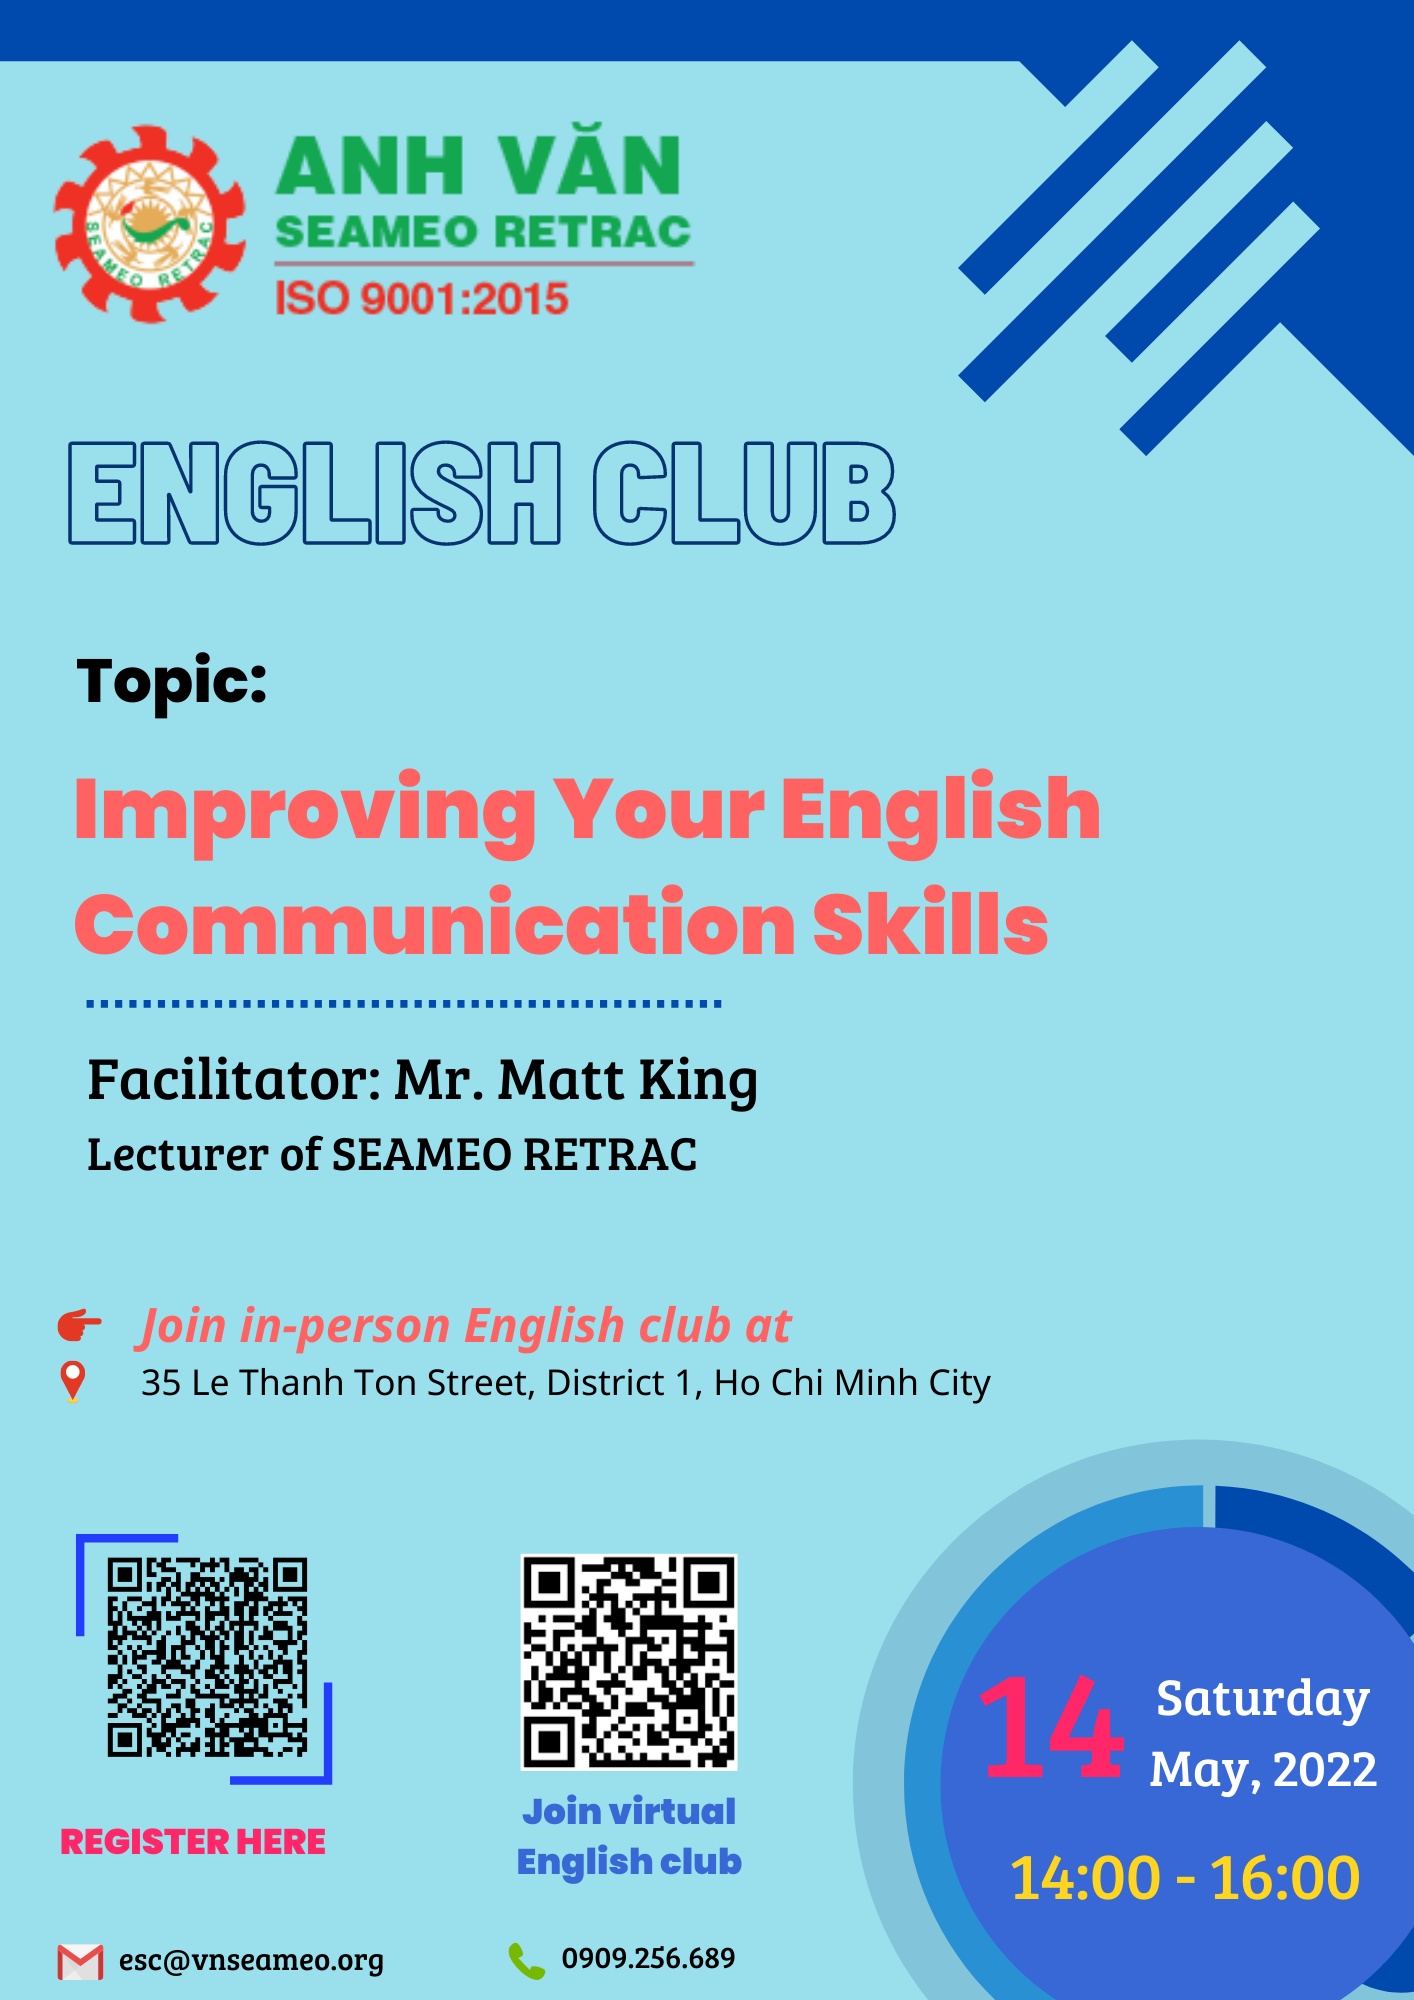 English club titled “Improving your English Communication Skills”